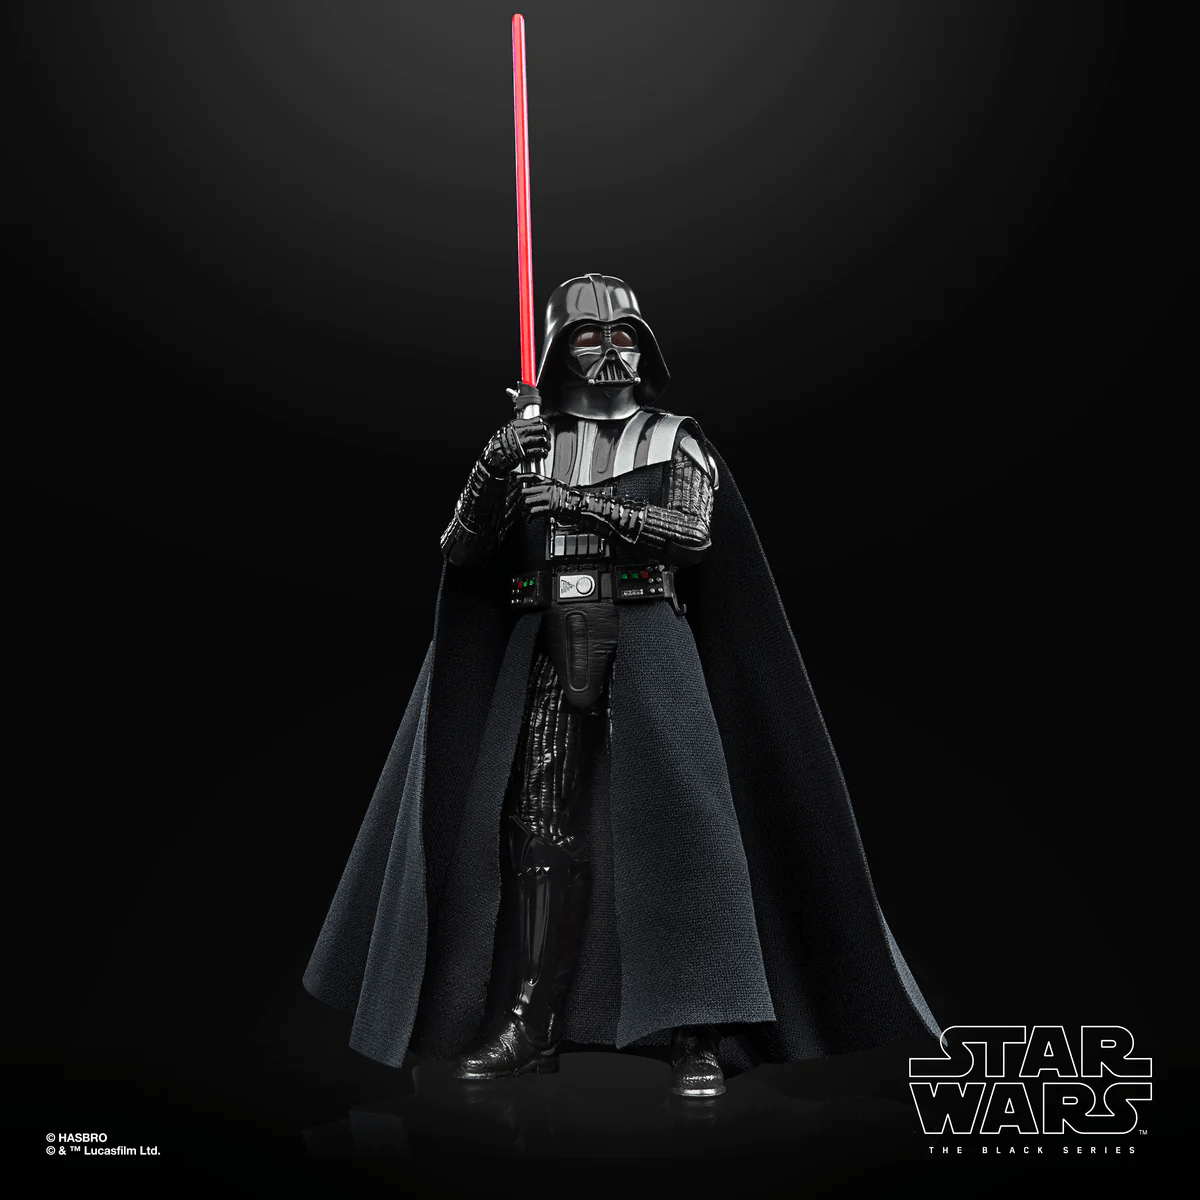 Hasbro Star Wars The Black Series (Obi-Wan Kenobi) Darth Vader Action Figure